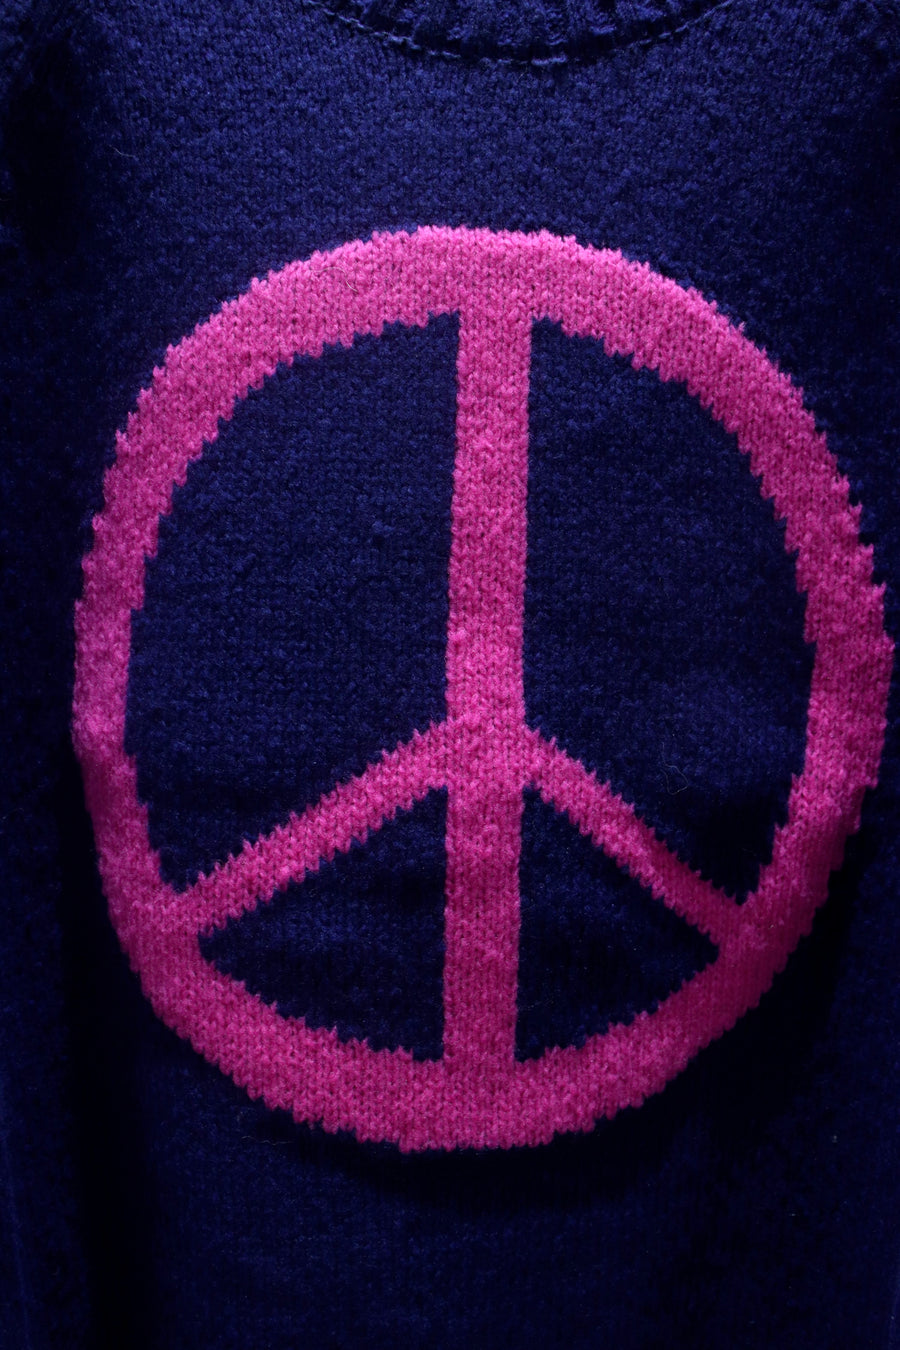 BED j.w. FORD  Peace Symbol Knit(BLUE)